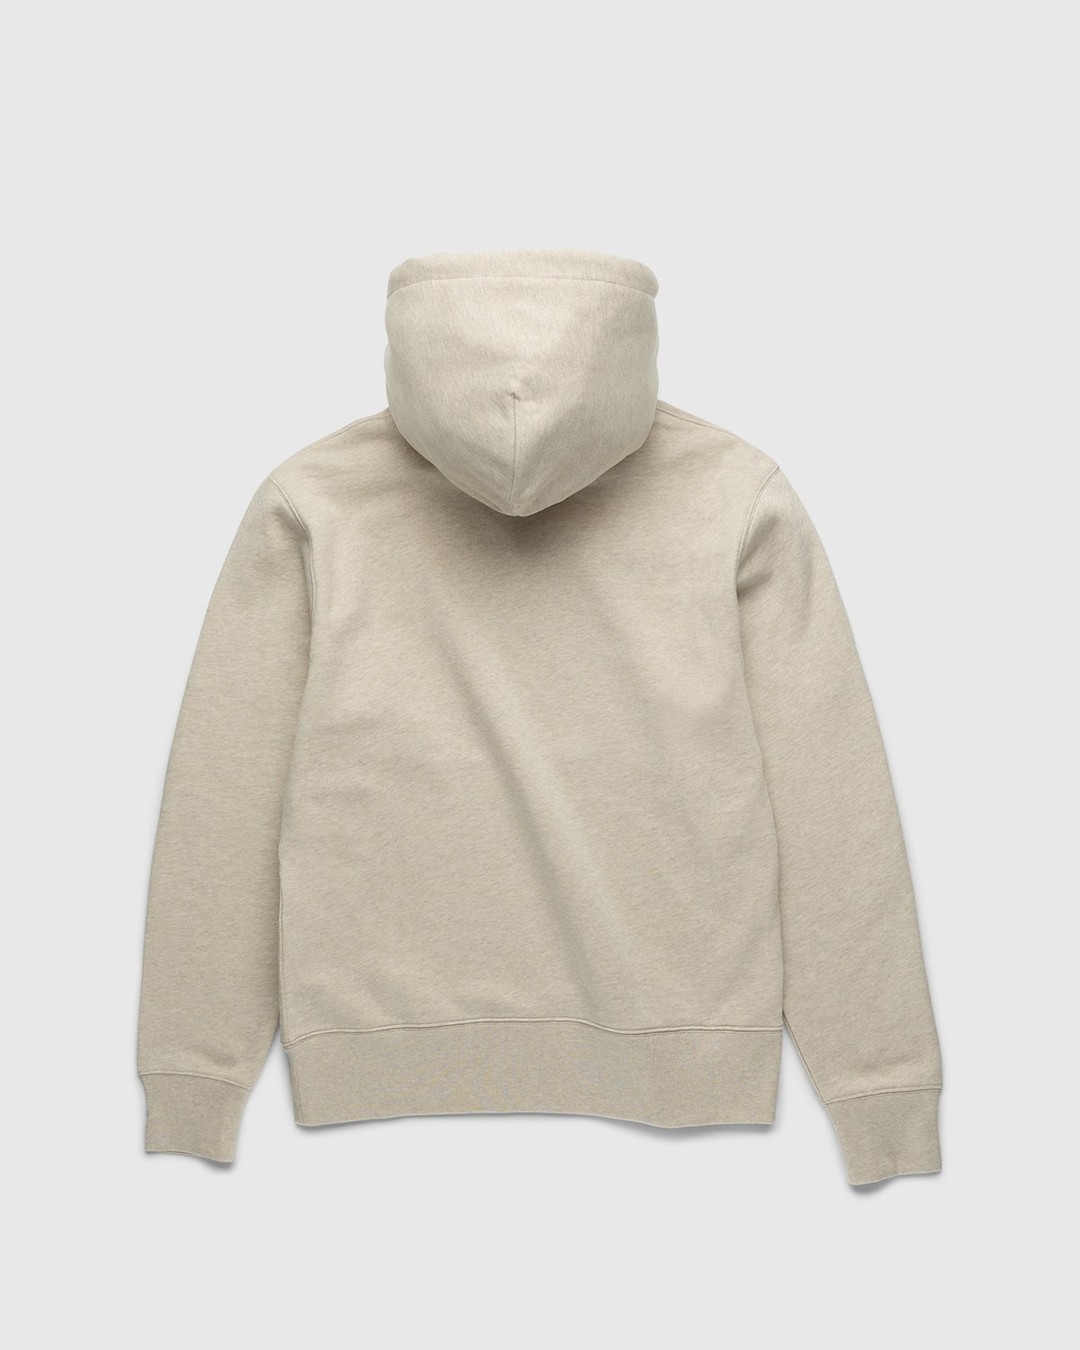 Acne Studios – Organic Cotton Hooded Sweatshirt Oatmeal Melange - Sweats - Beige - Image 2